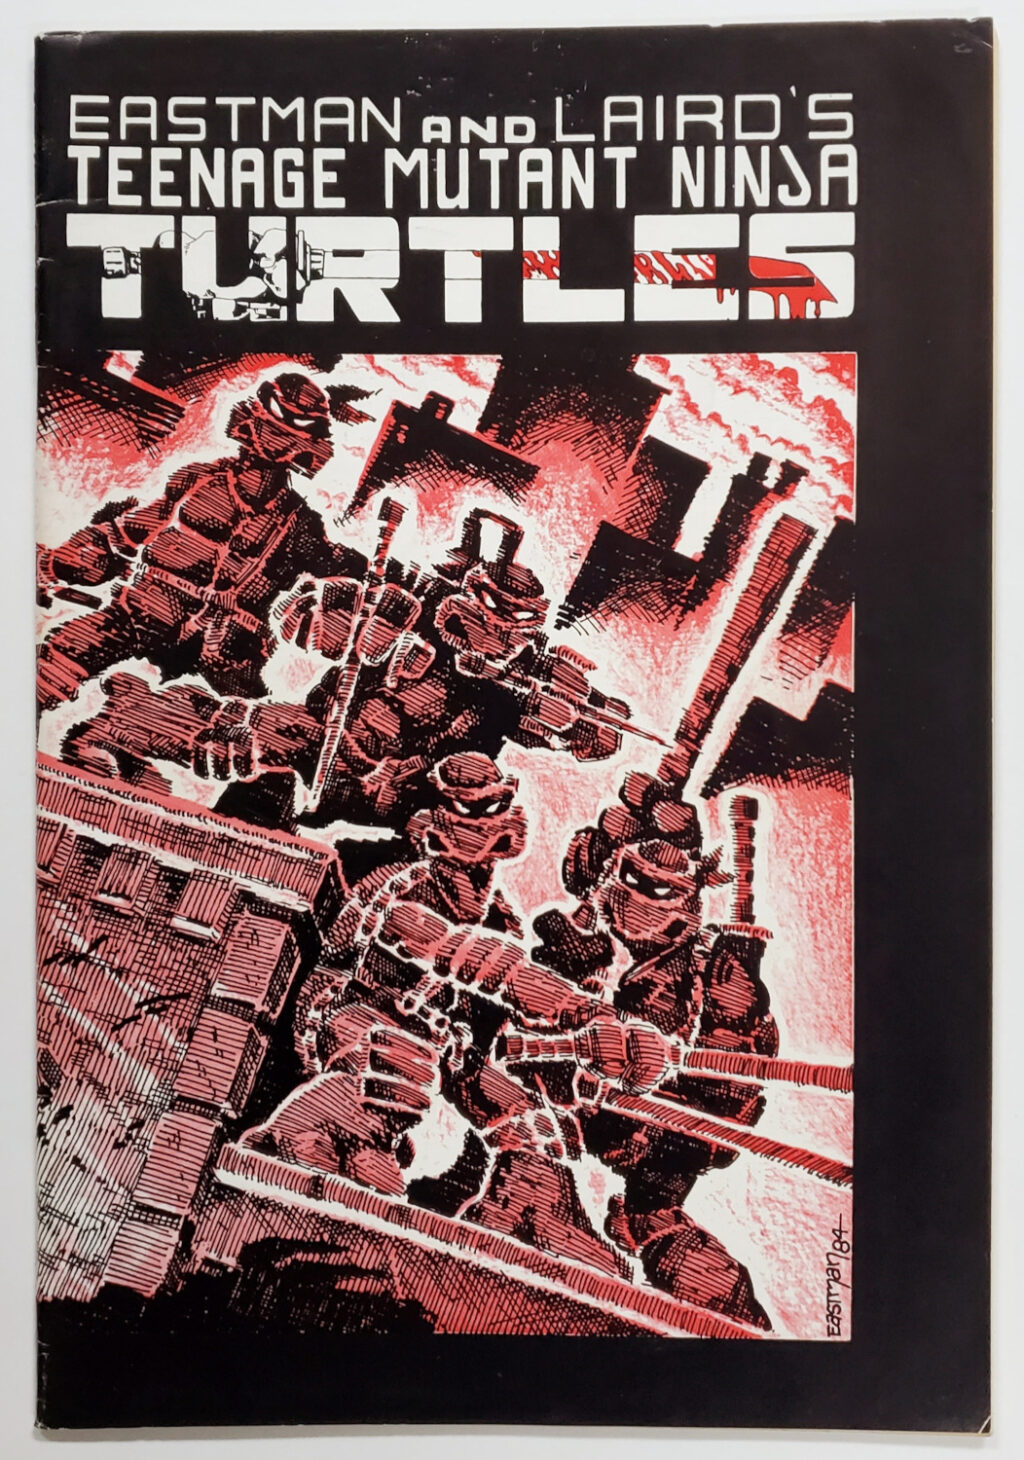 1984 Mirage Studios Teenage Mutant Ninja Turtles #1 : First Print with Mailer Envelope 1